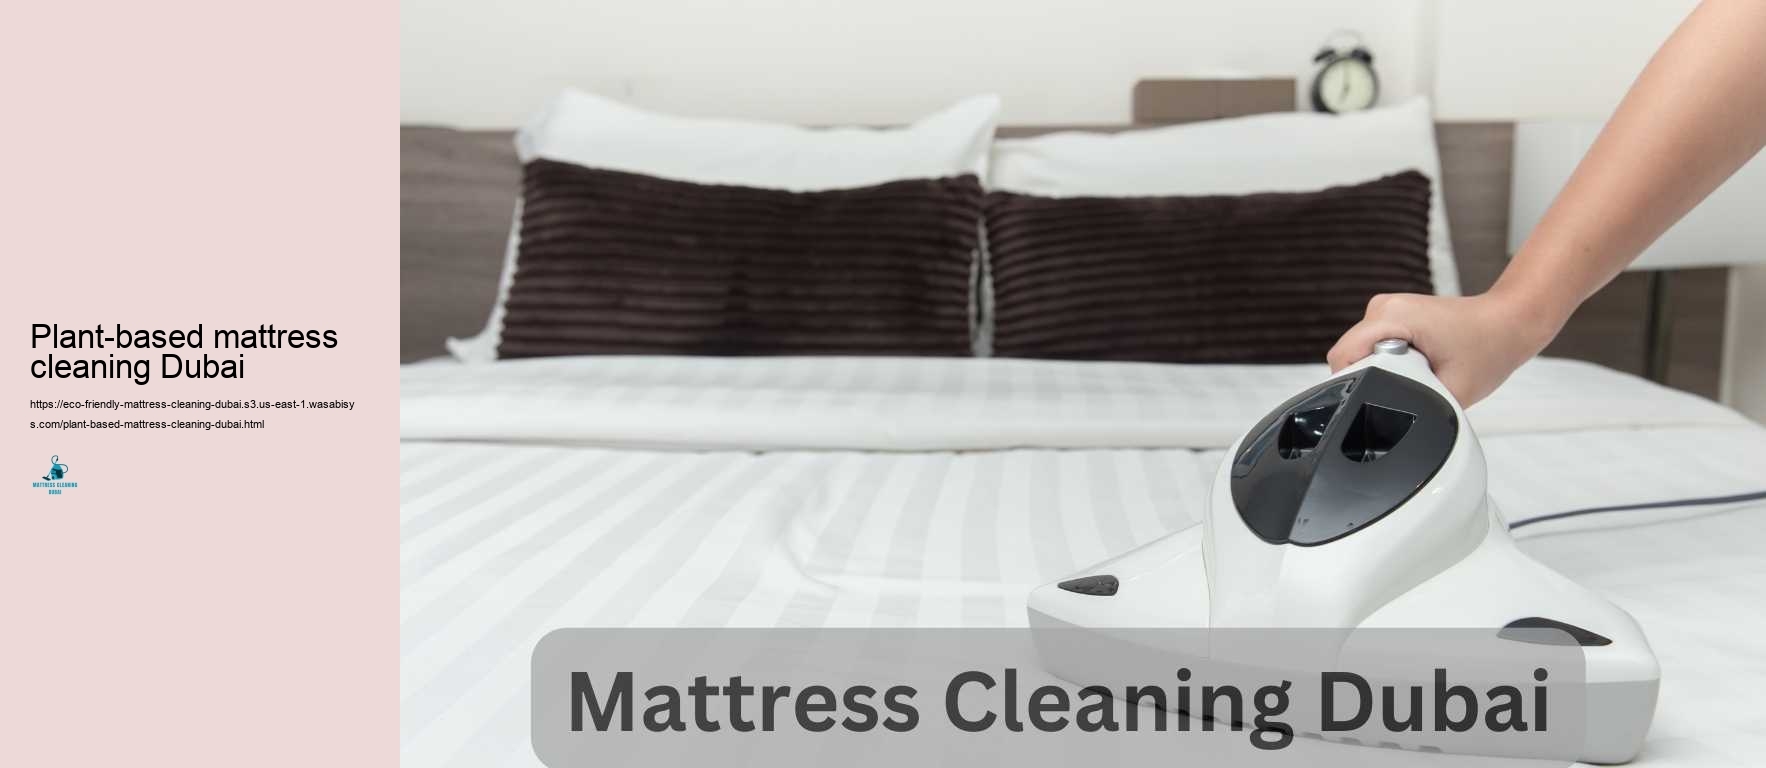 Plant-based mattress cleaning Dubai